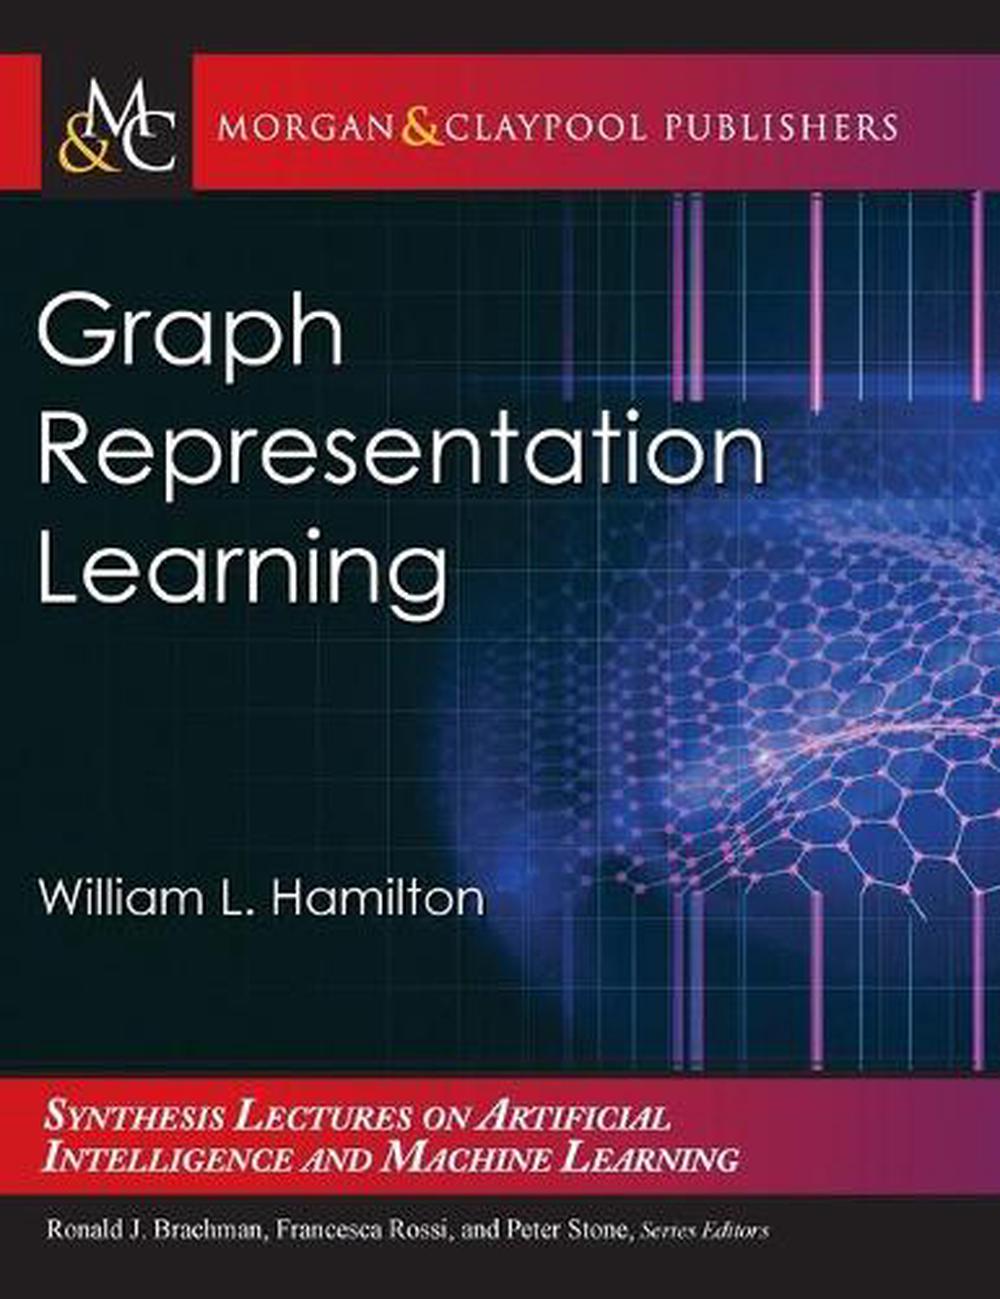 graph representation learning book by william l. hamilton